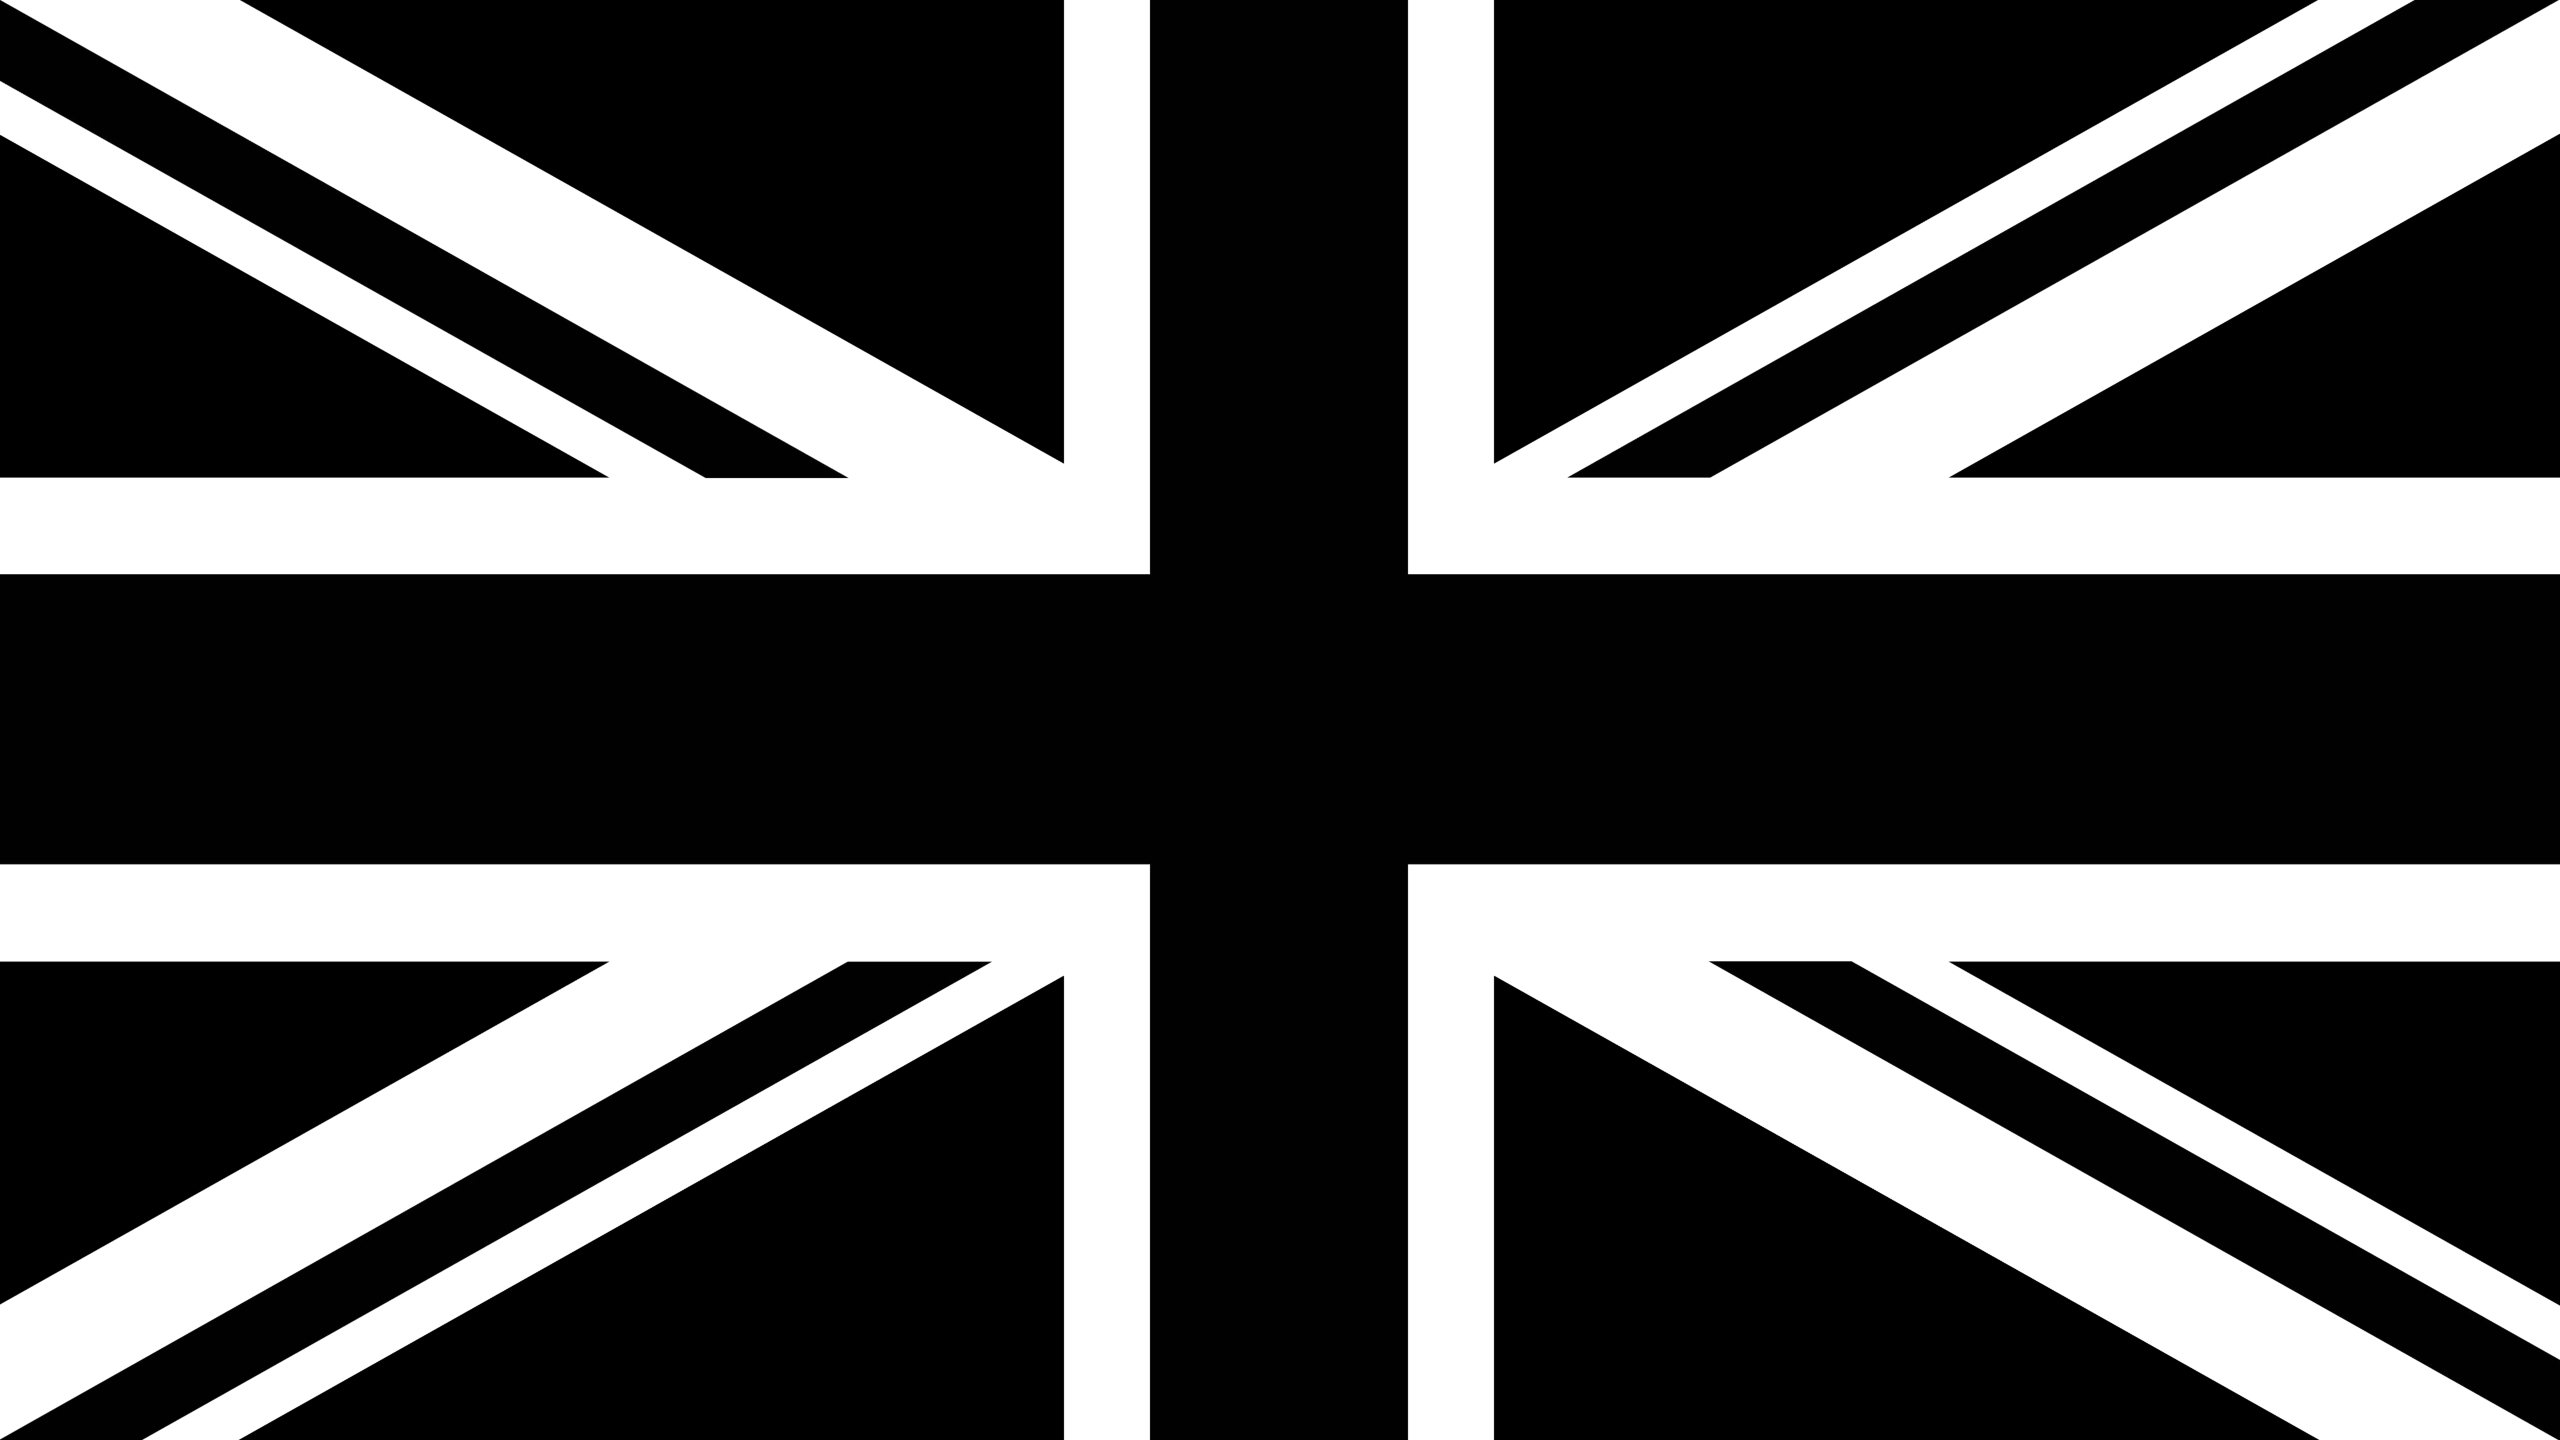 General 2560x1440 black flag UK Britain British flag digital art monochrome simple background